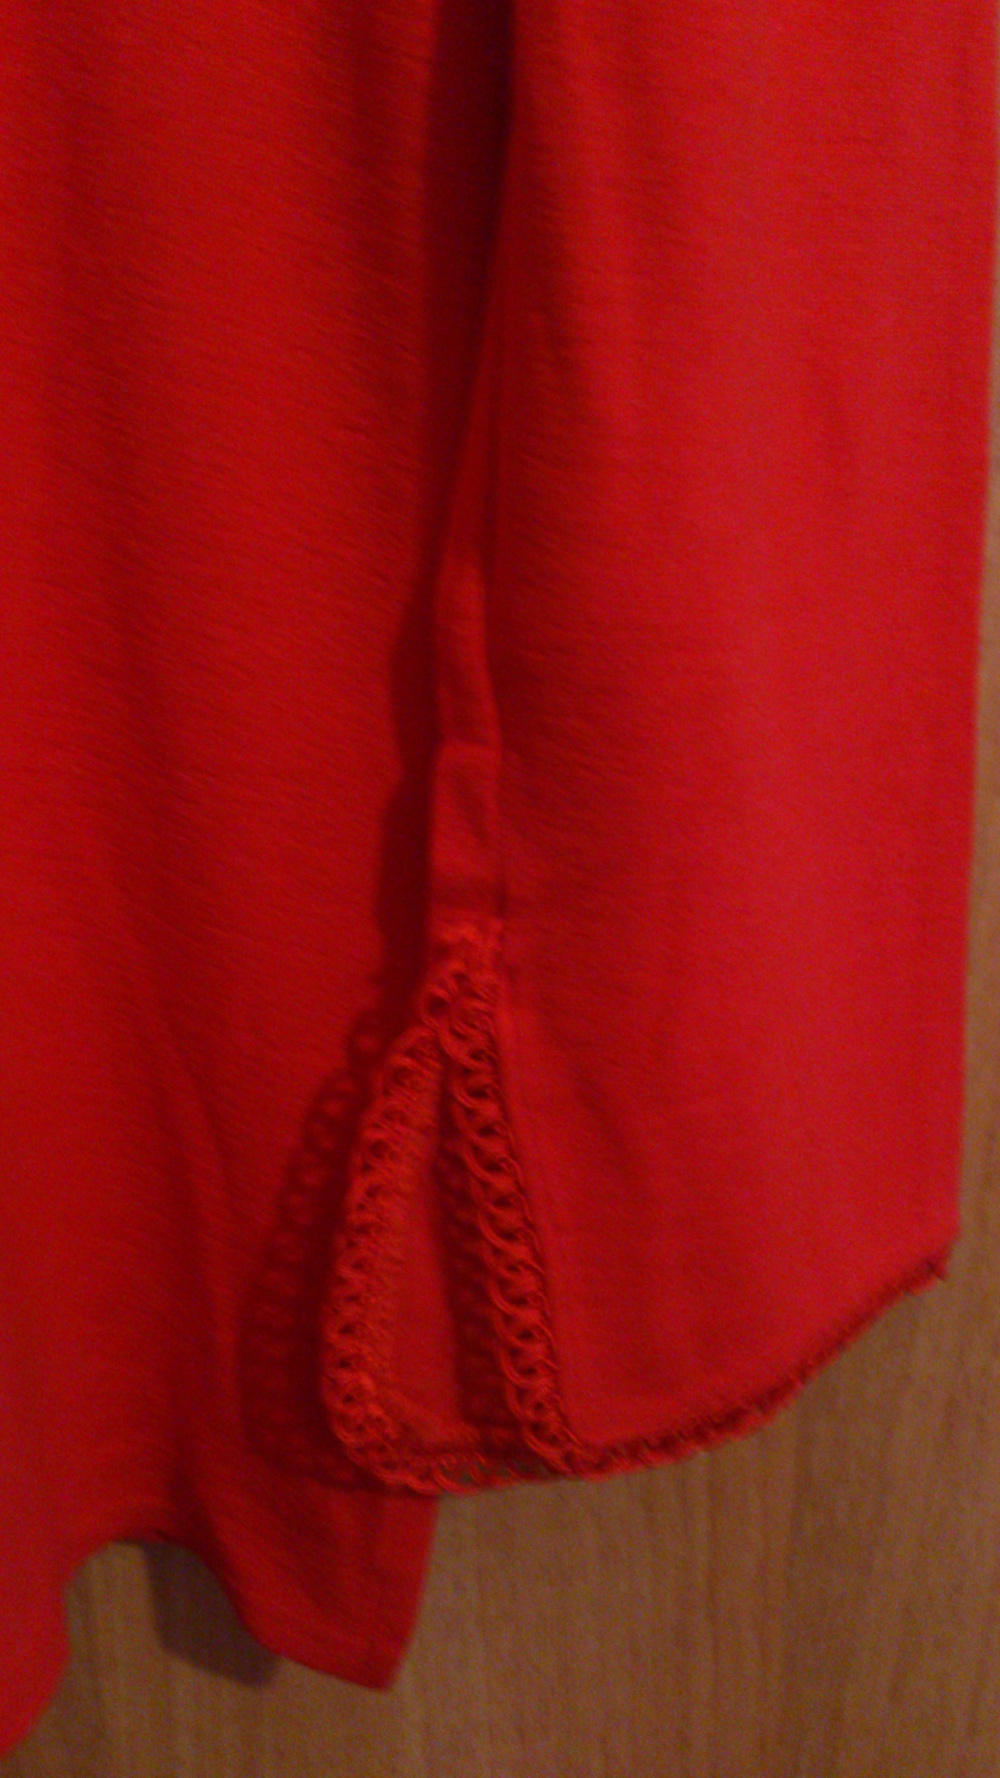 Кофта = туника красная, размер 50-54, Турция